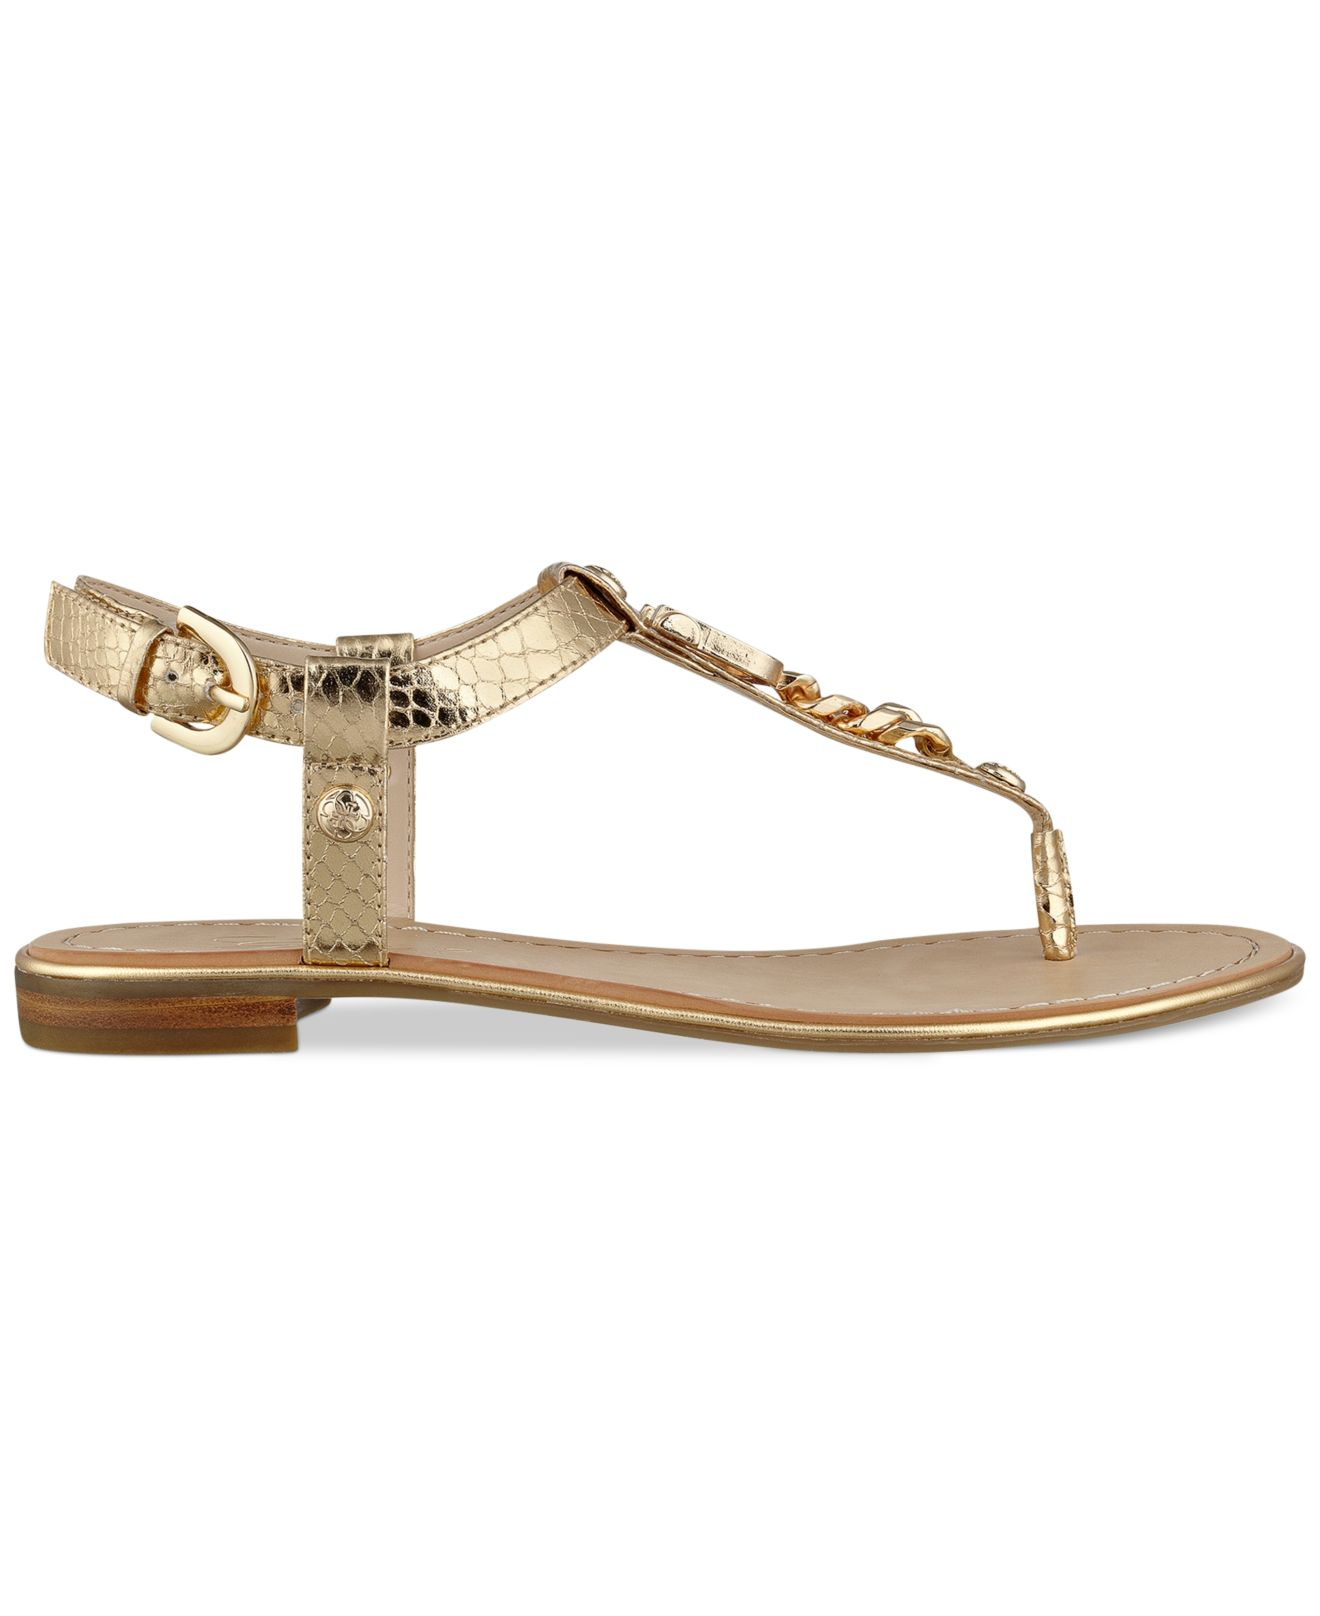 Guess Rehan Chain Thong Sandals in Gold (Metallic) - Lyst